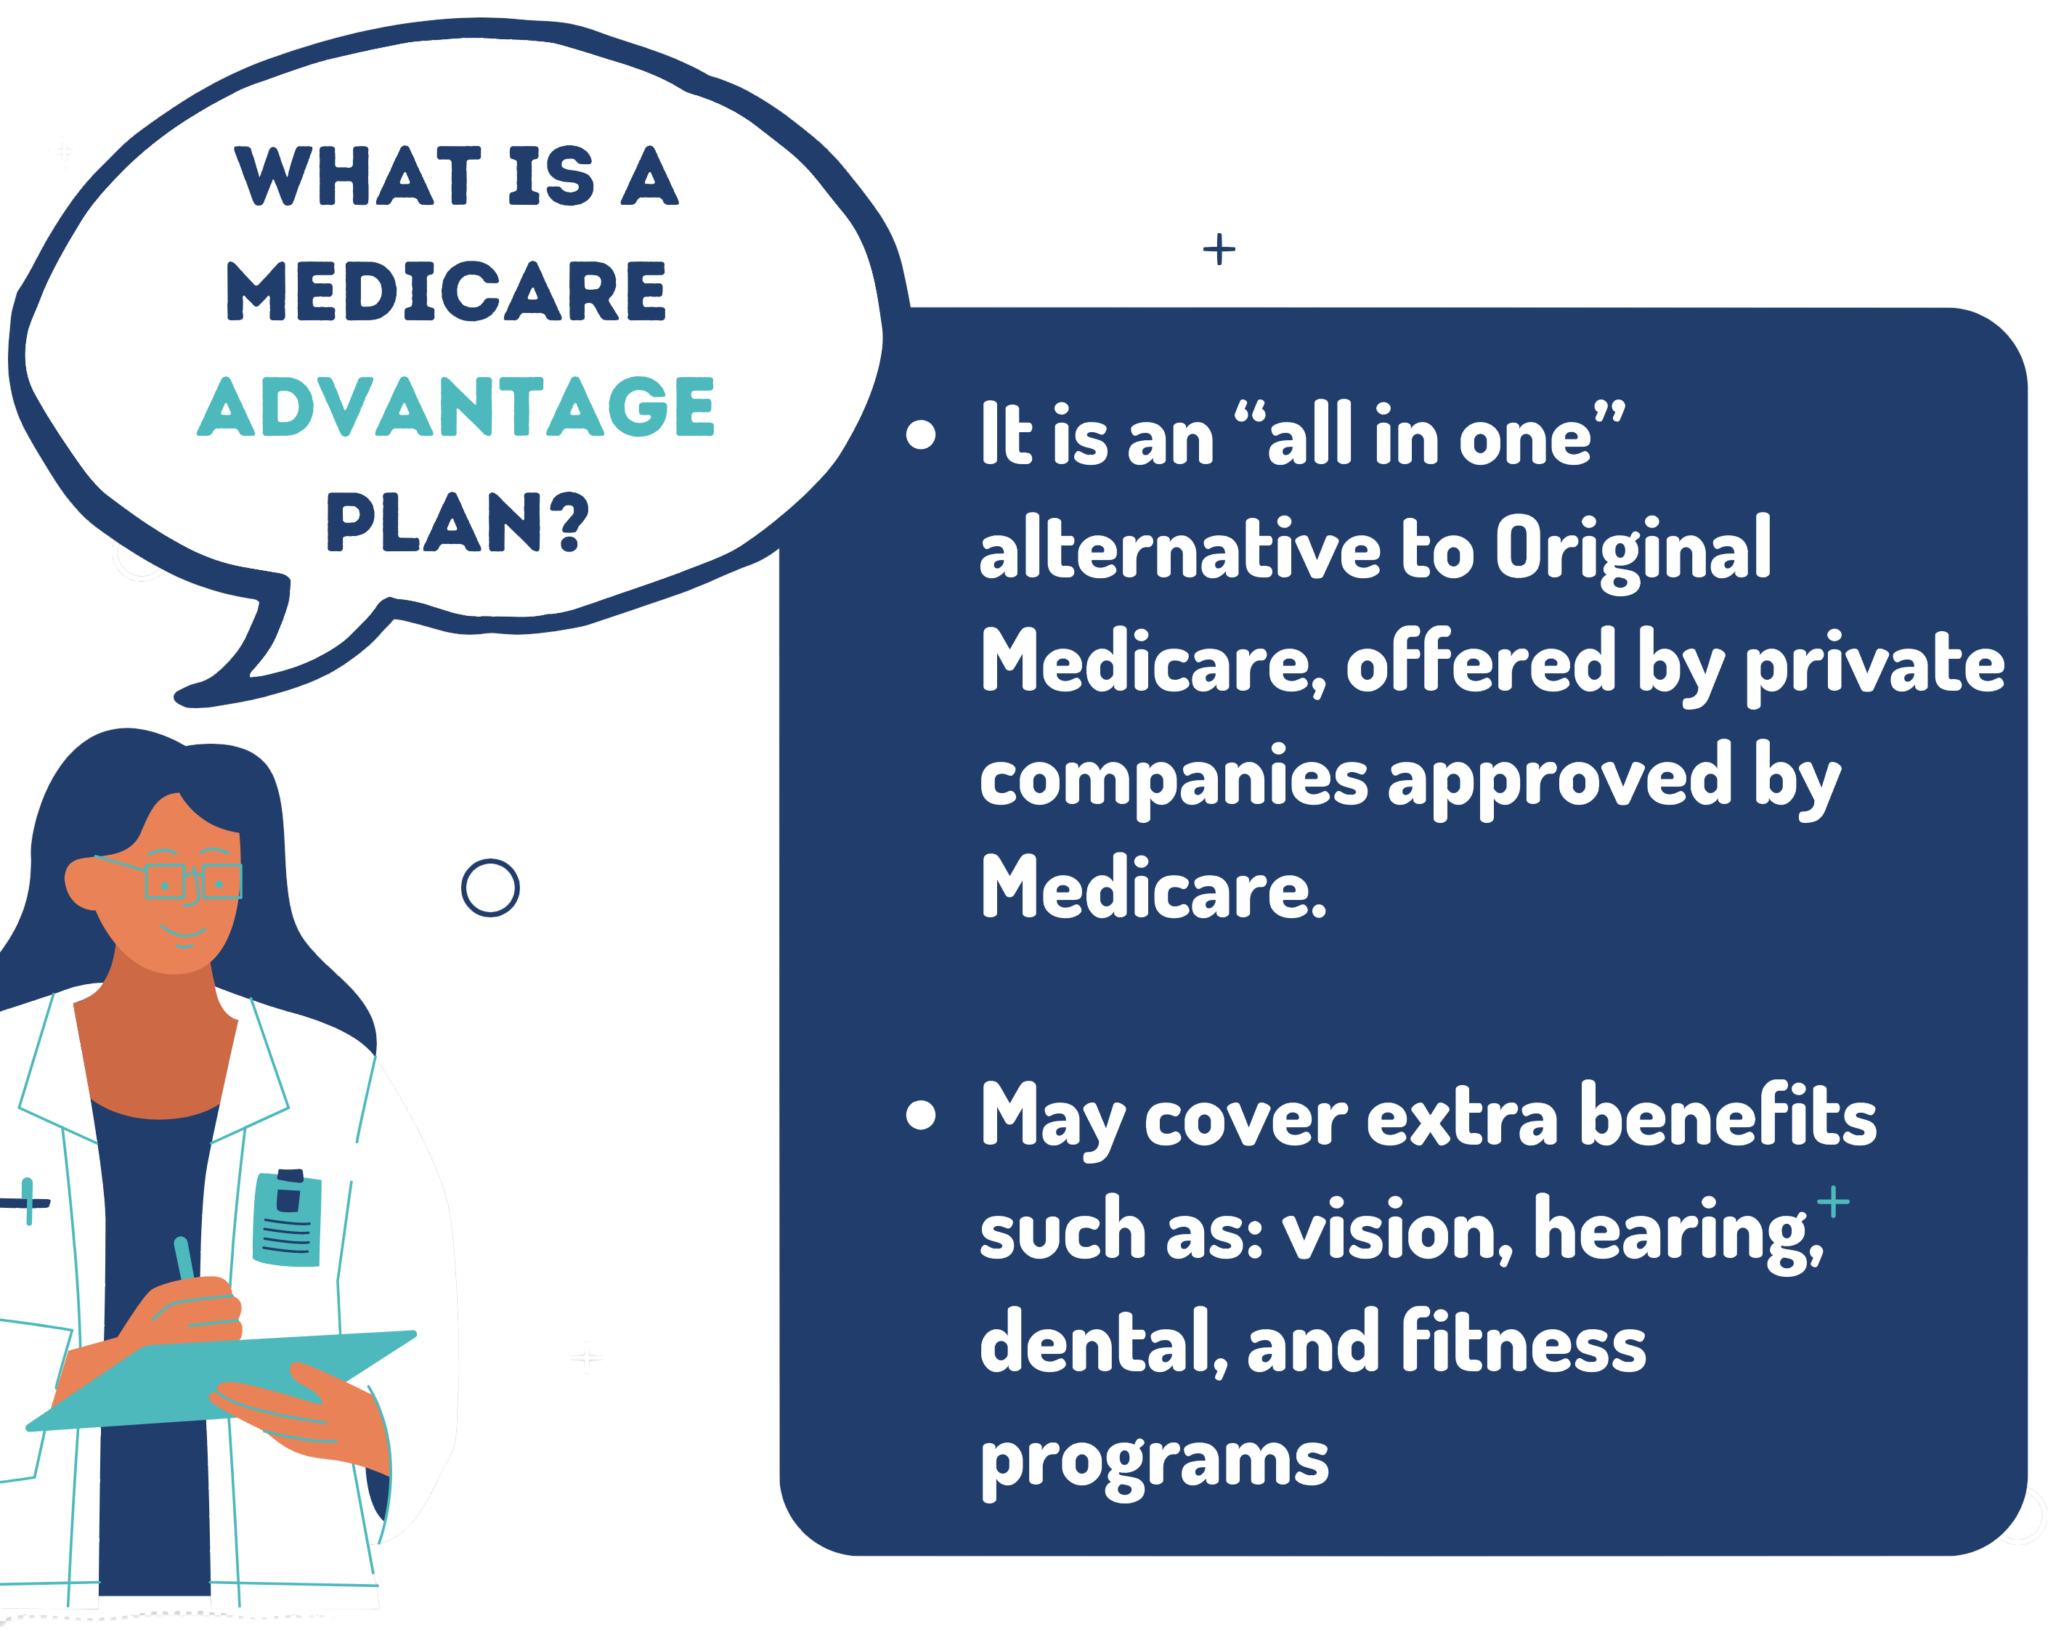 Medicare Plans Life, Health, & Medicare Insurance